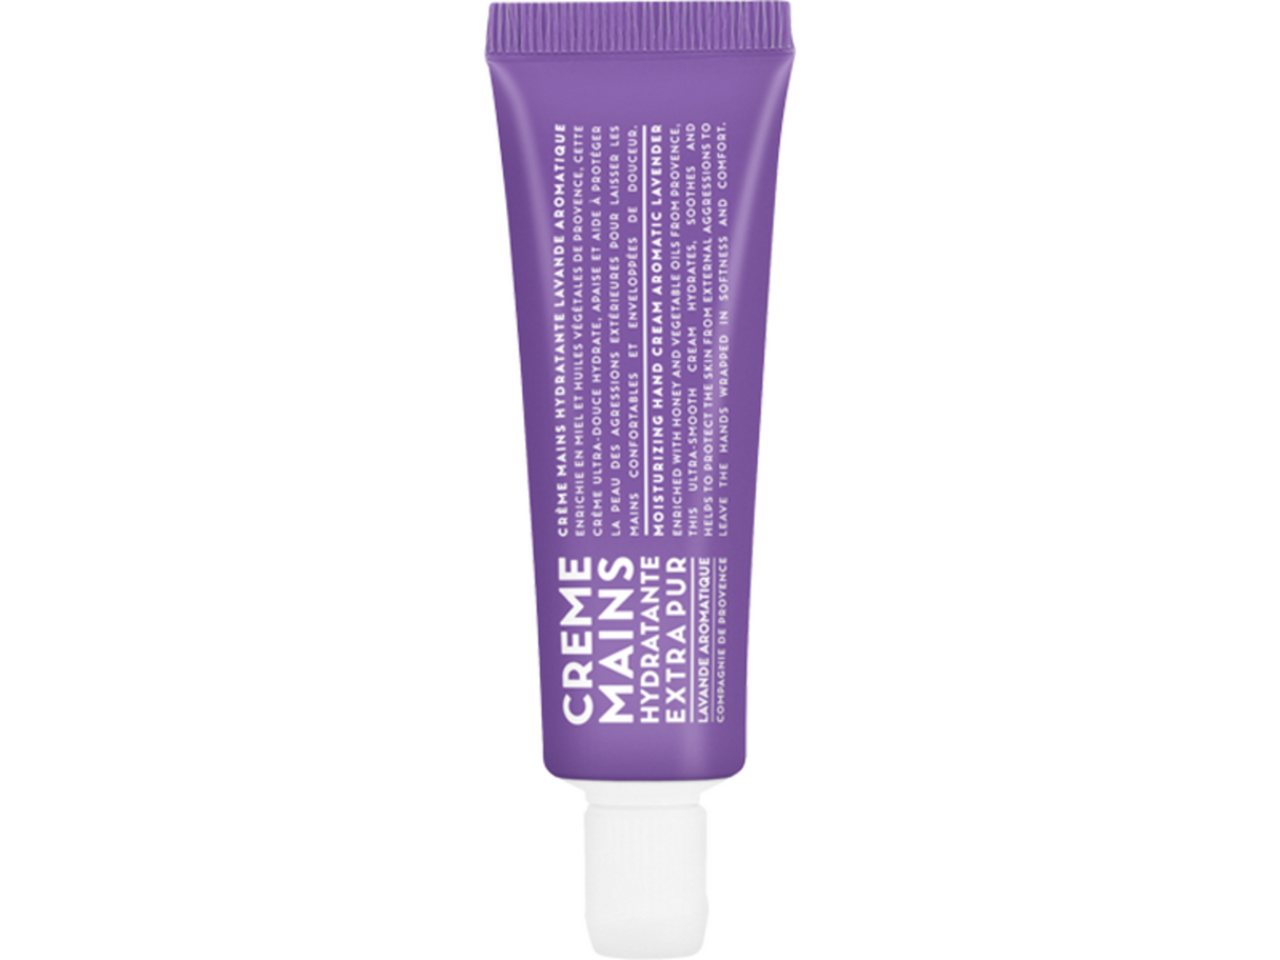 COMPAGNIE DE PROVENCE Handcreme Extra Pur Hand Cream Aromatic Lavender von COMPAGNIE DE PROVENCE